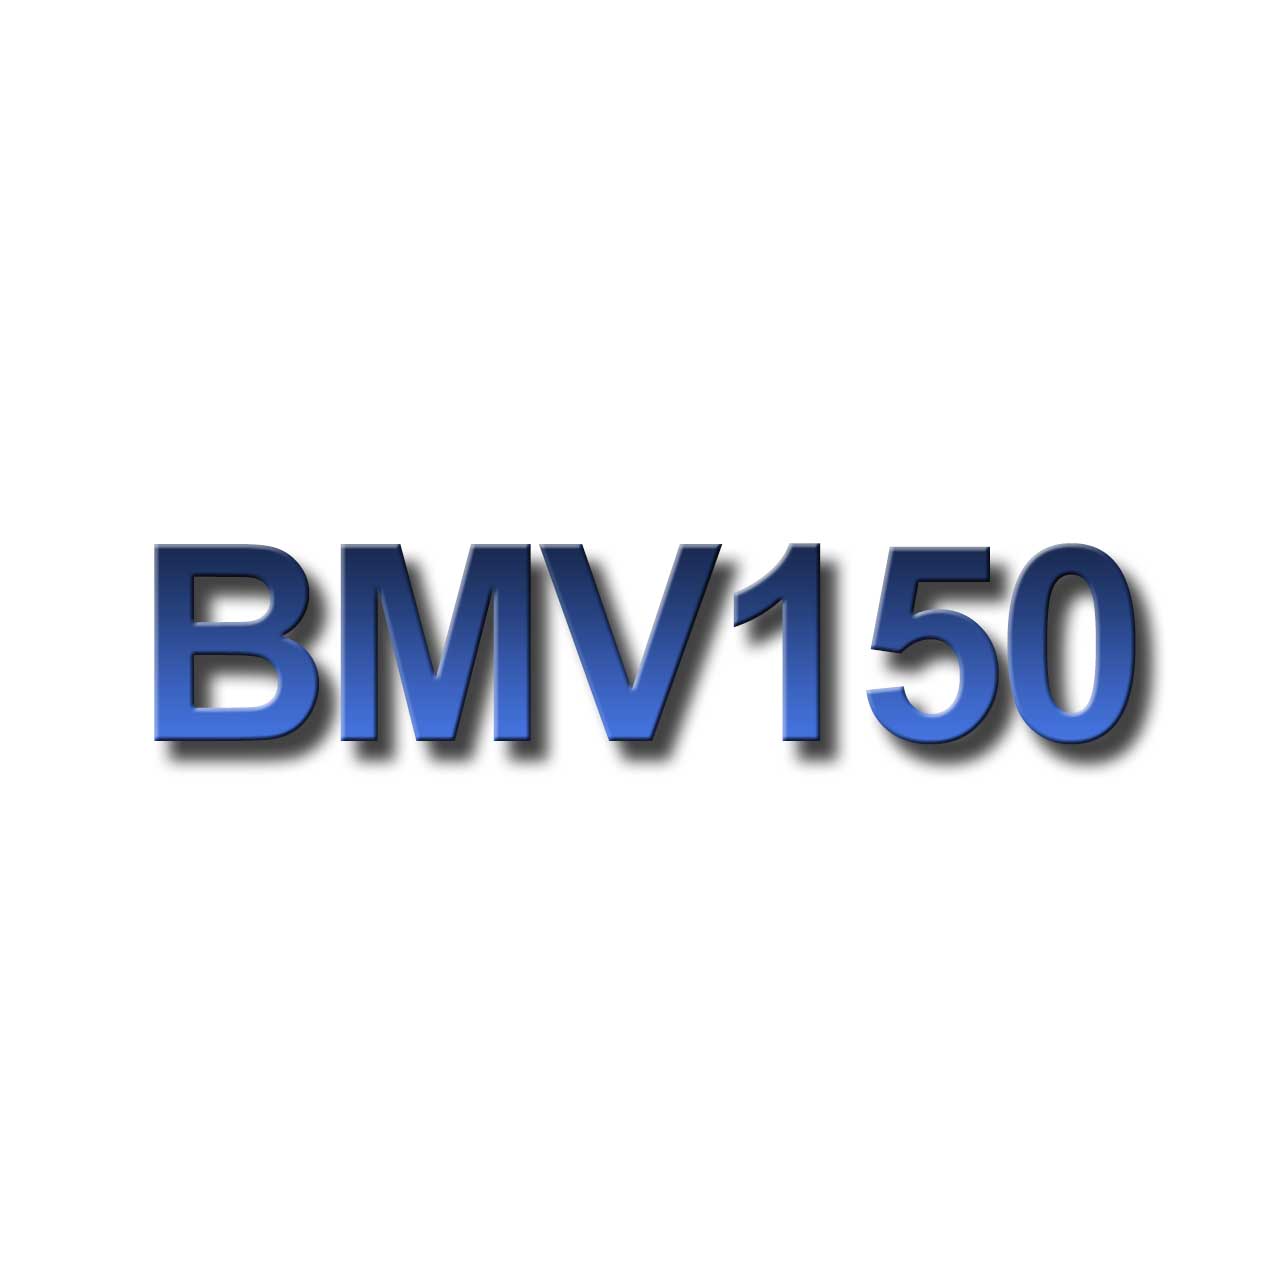 BMV(F)150